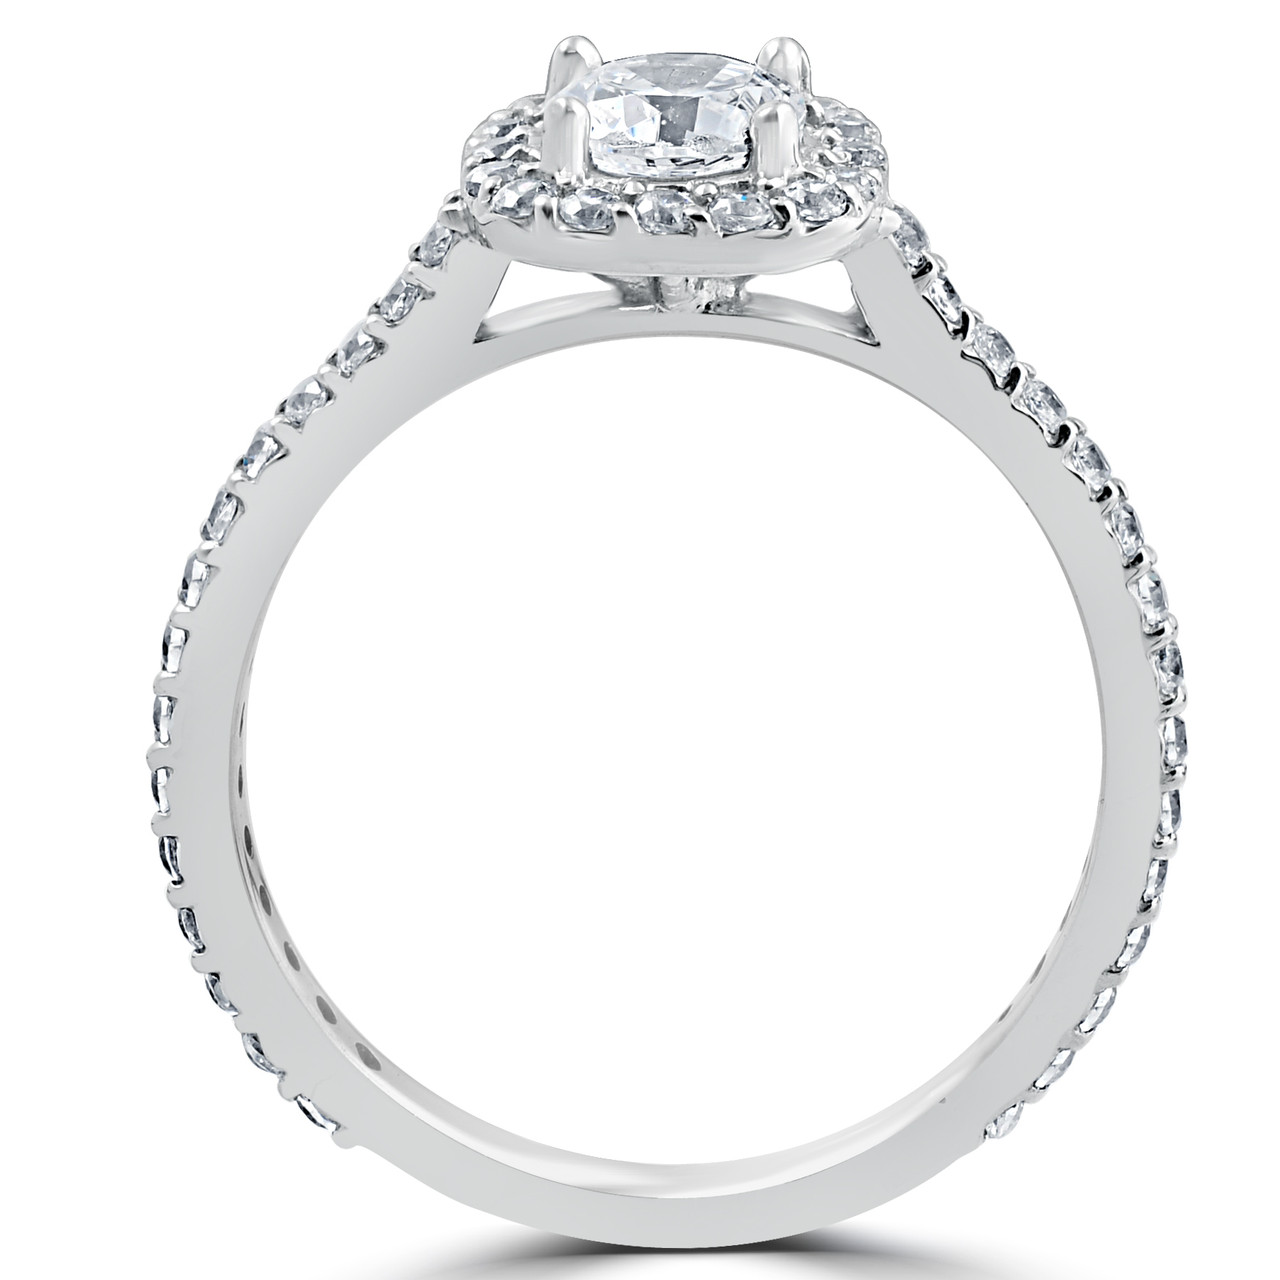 Shop Lab Grown Diamond Engagement Rings in Edmonton | Cullen Jewellery